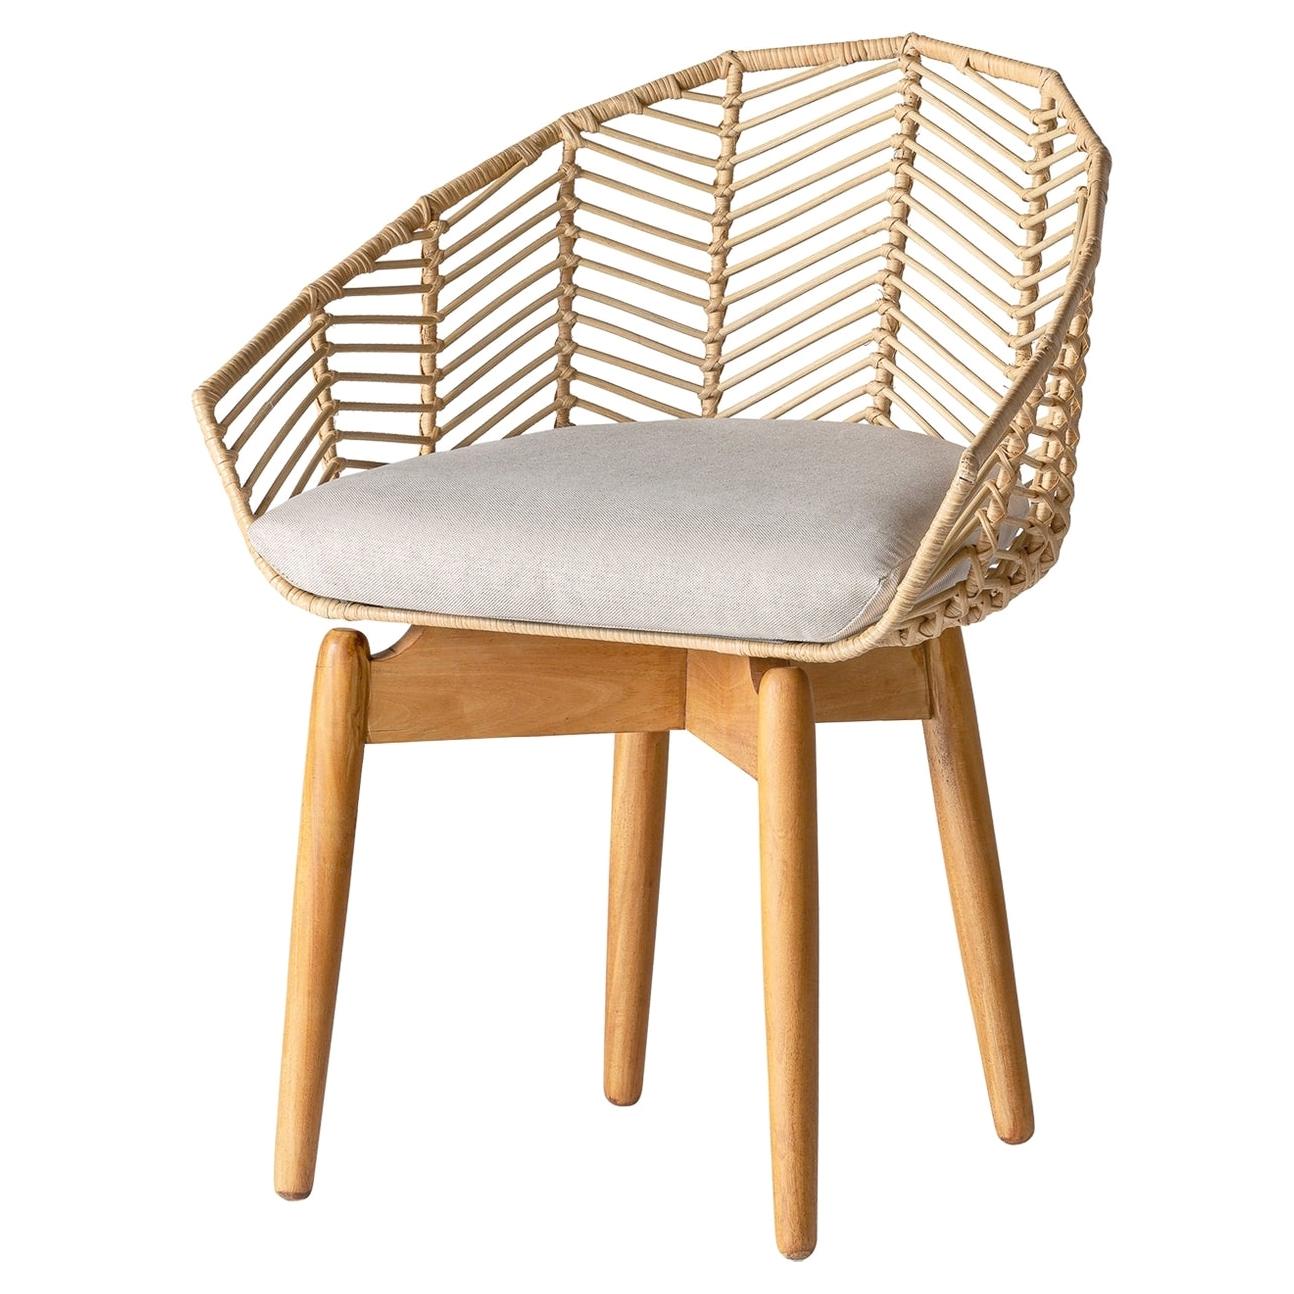 Mahagoni-Stuhl aus Holz und Rattan Korbweide